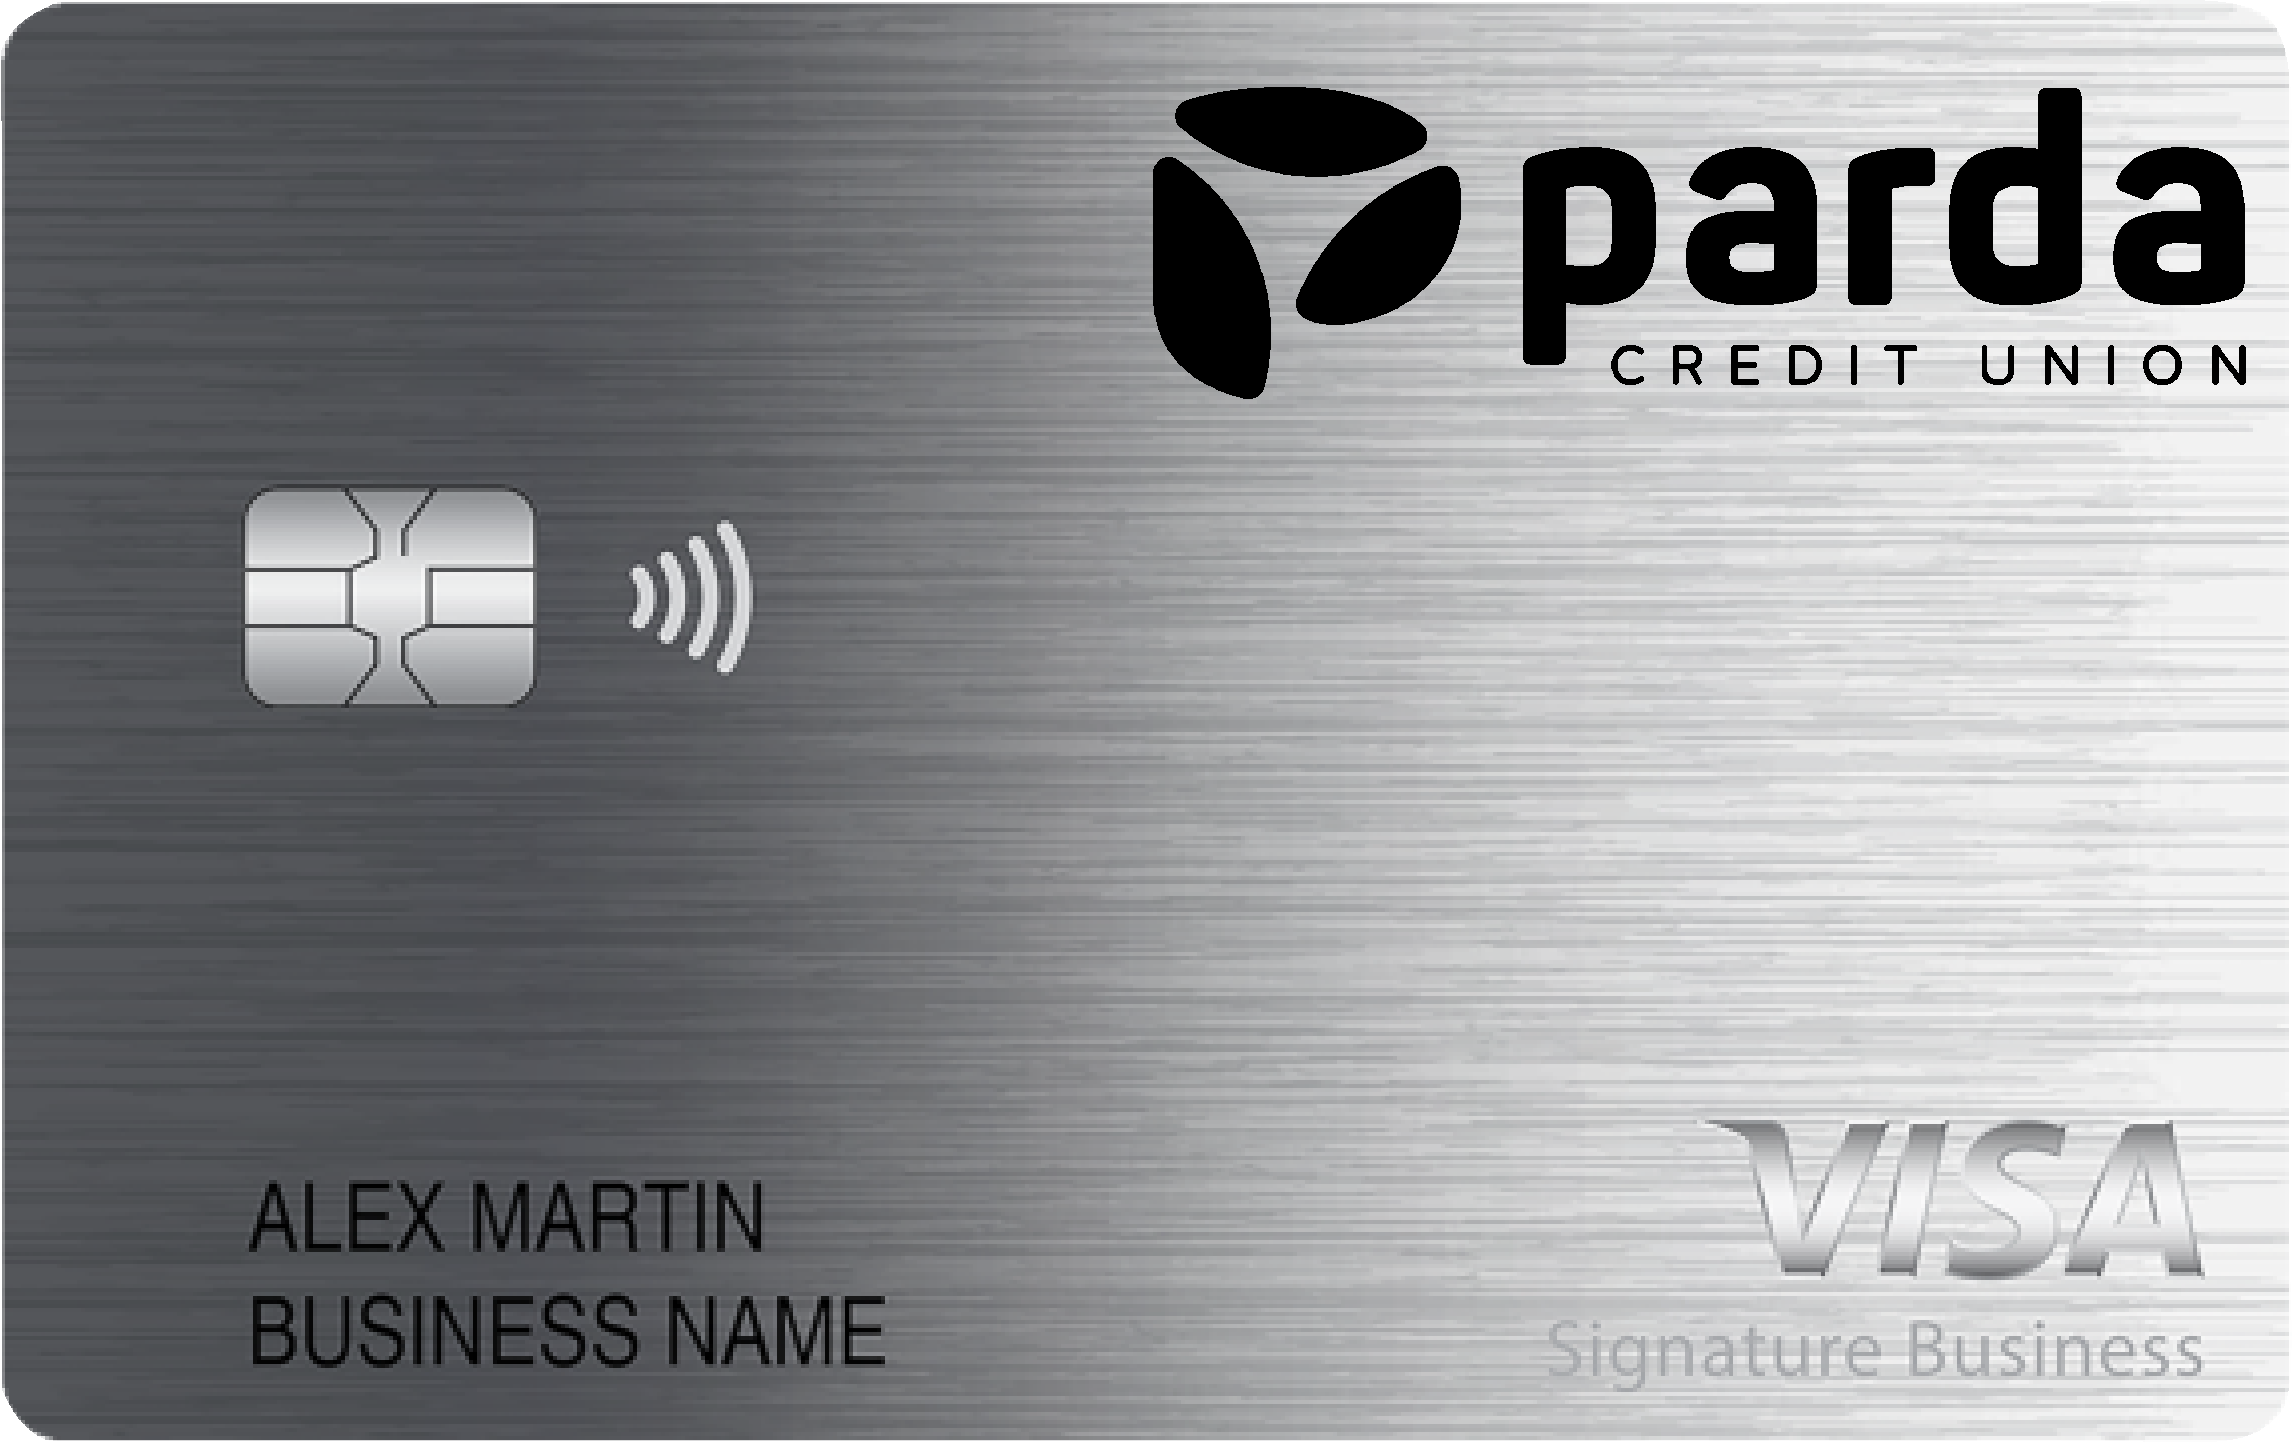 Parda Credit Union Smart Business Rewards Card